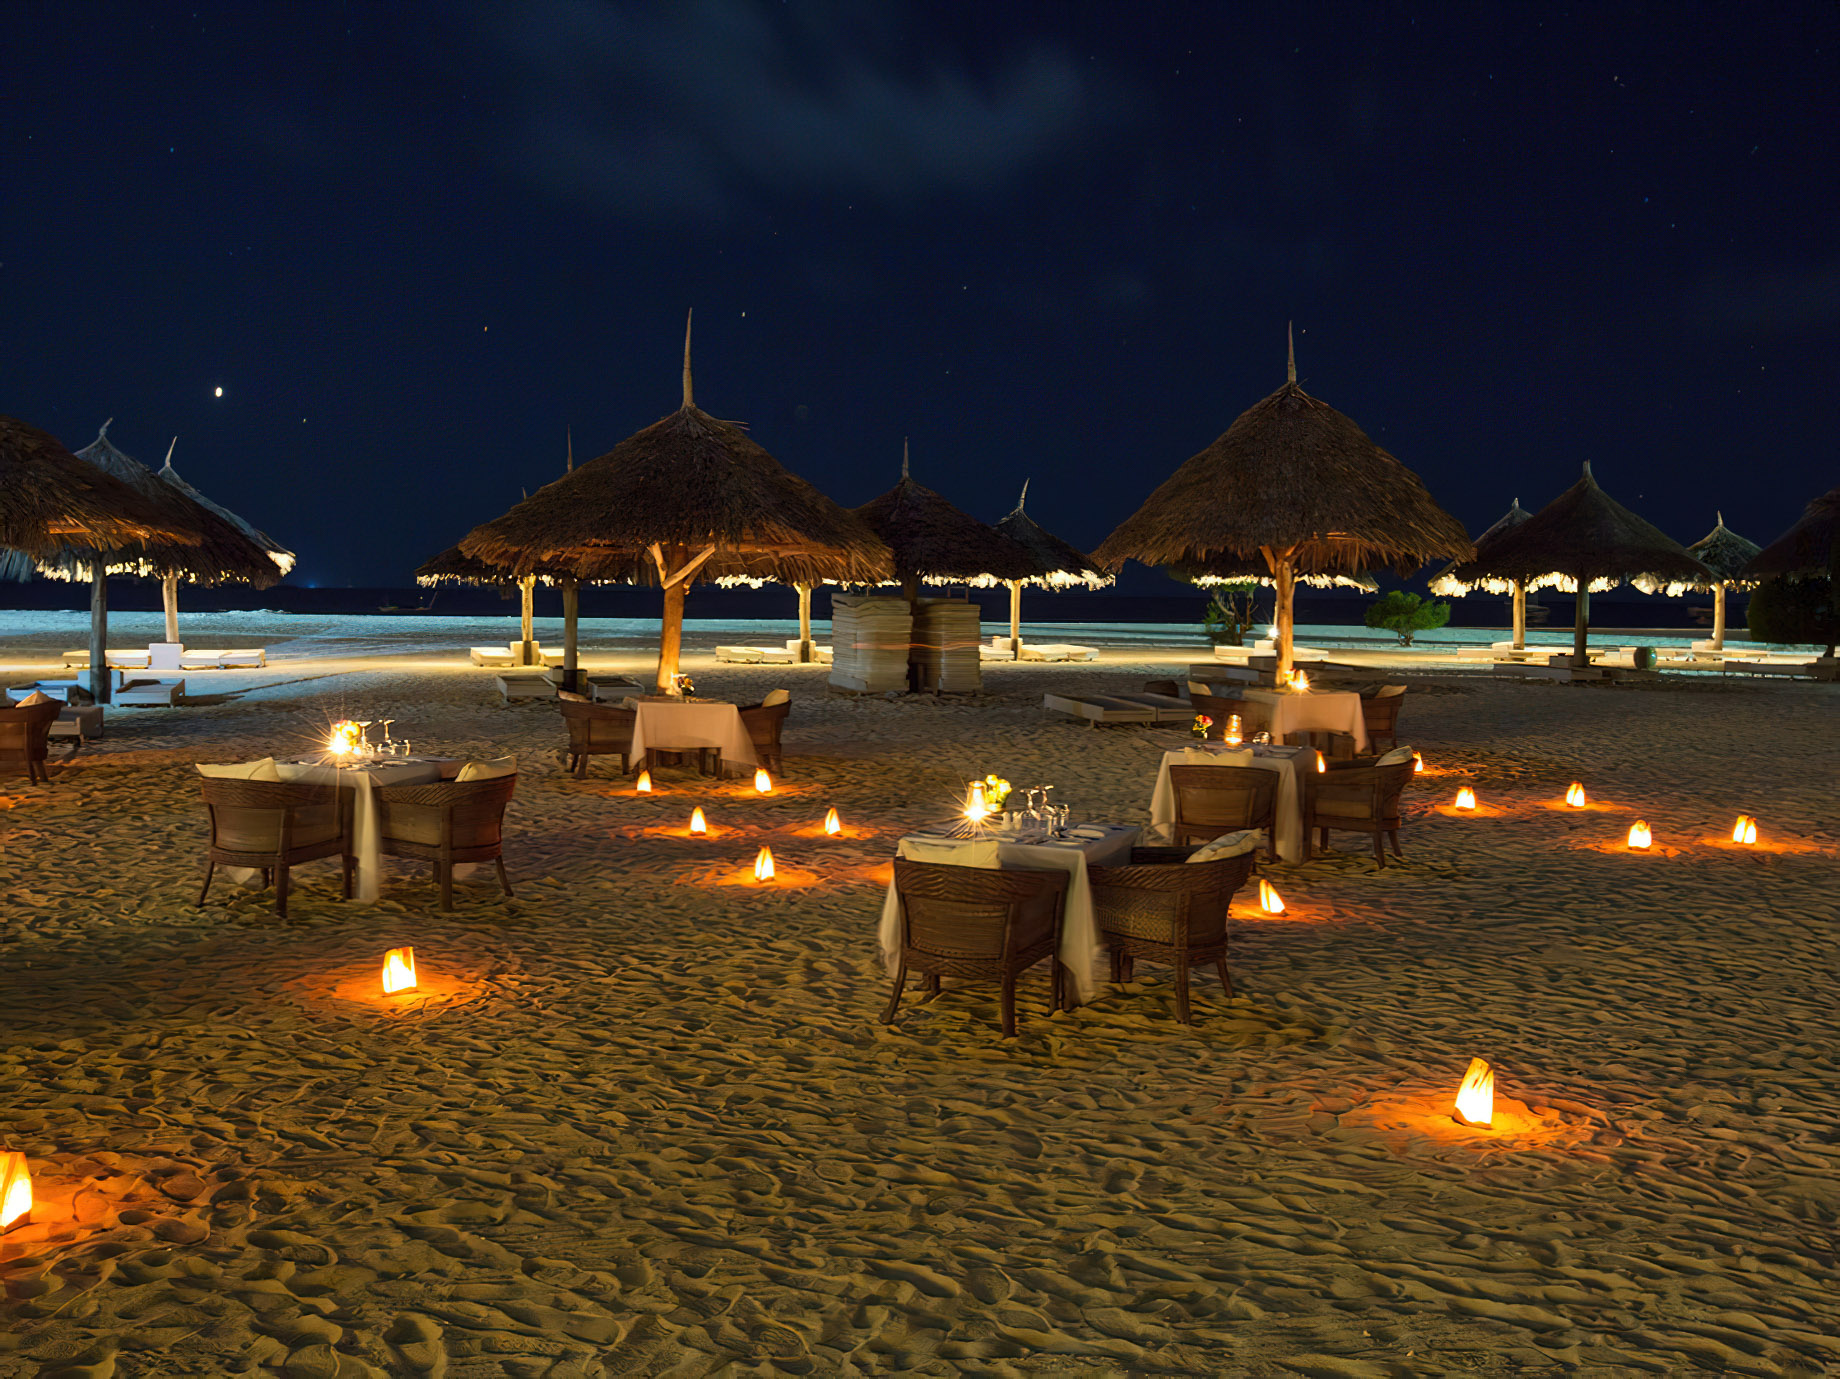 Gold Zanzibar Beach House & Spa Resort – Nungwi, Zanzibar, Tanzania – Resort Beach Dining Night View